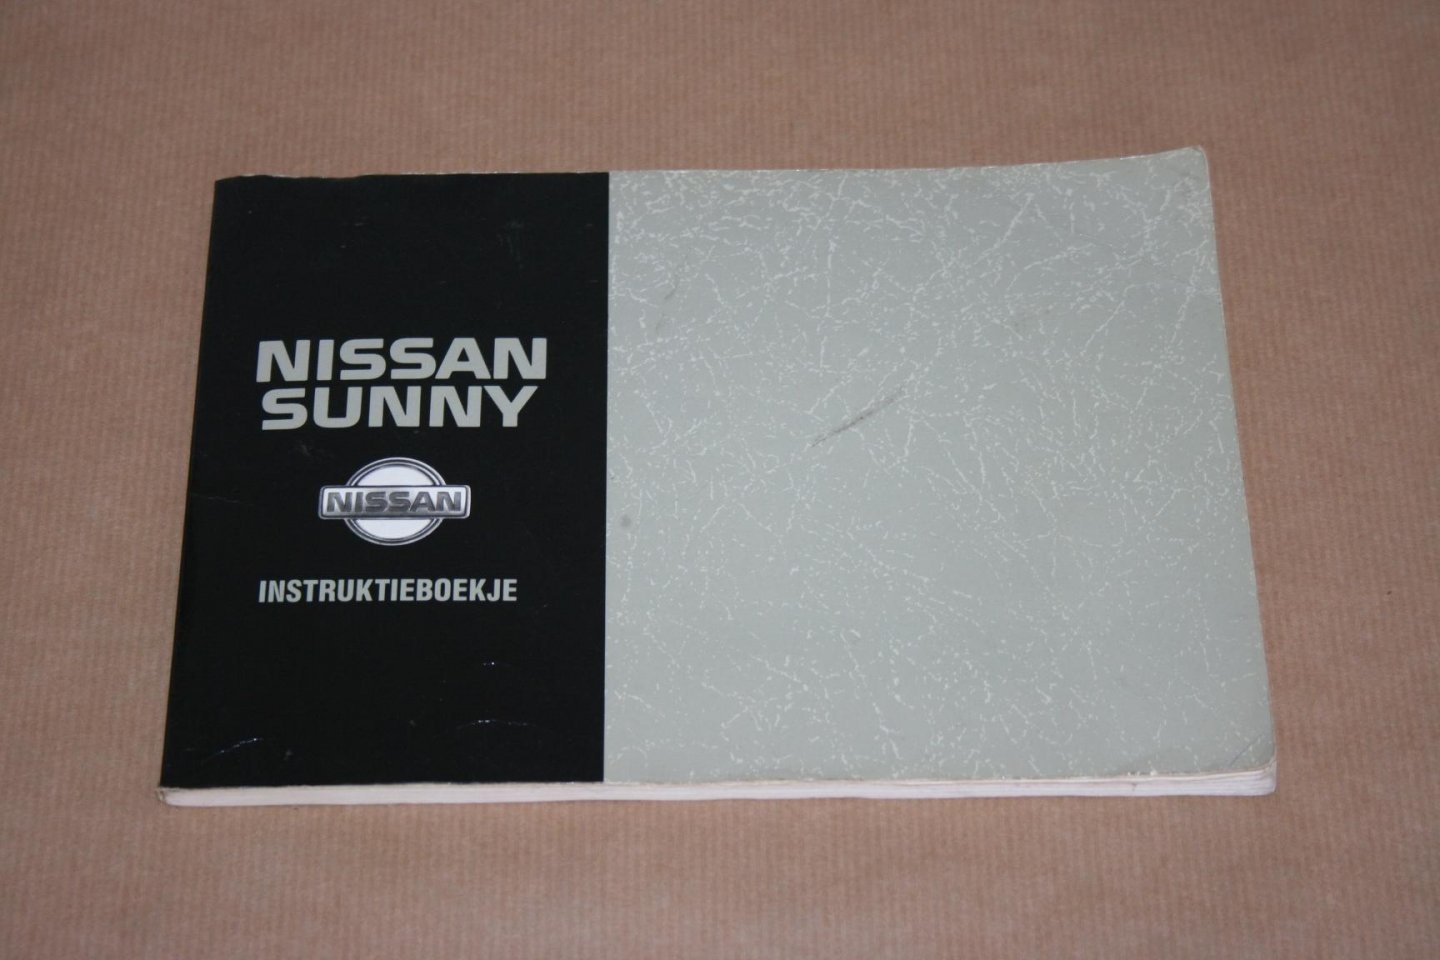  - Nissan Sunny Instruktieboekje - 1994